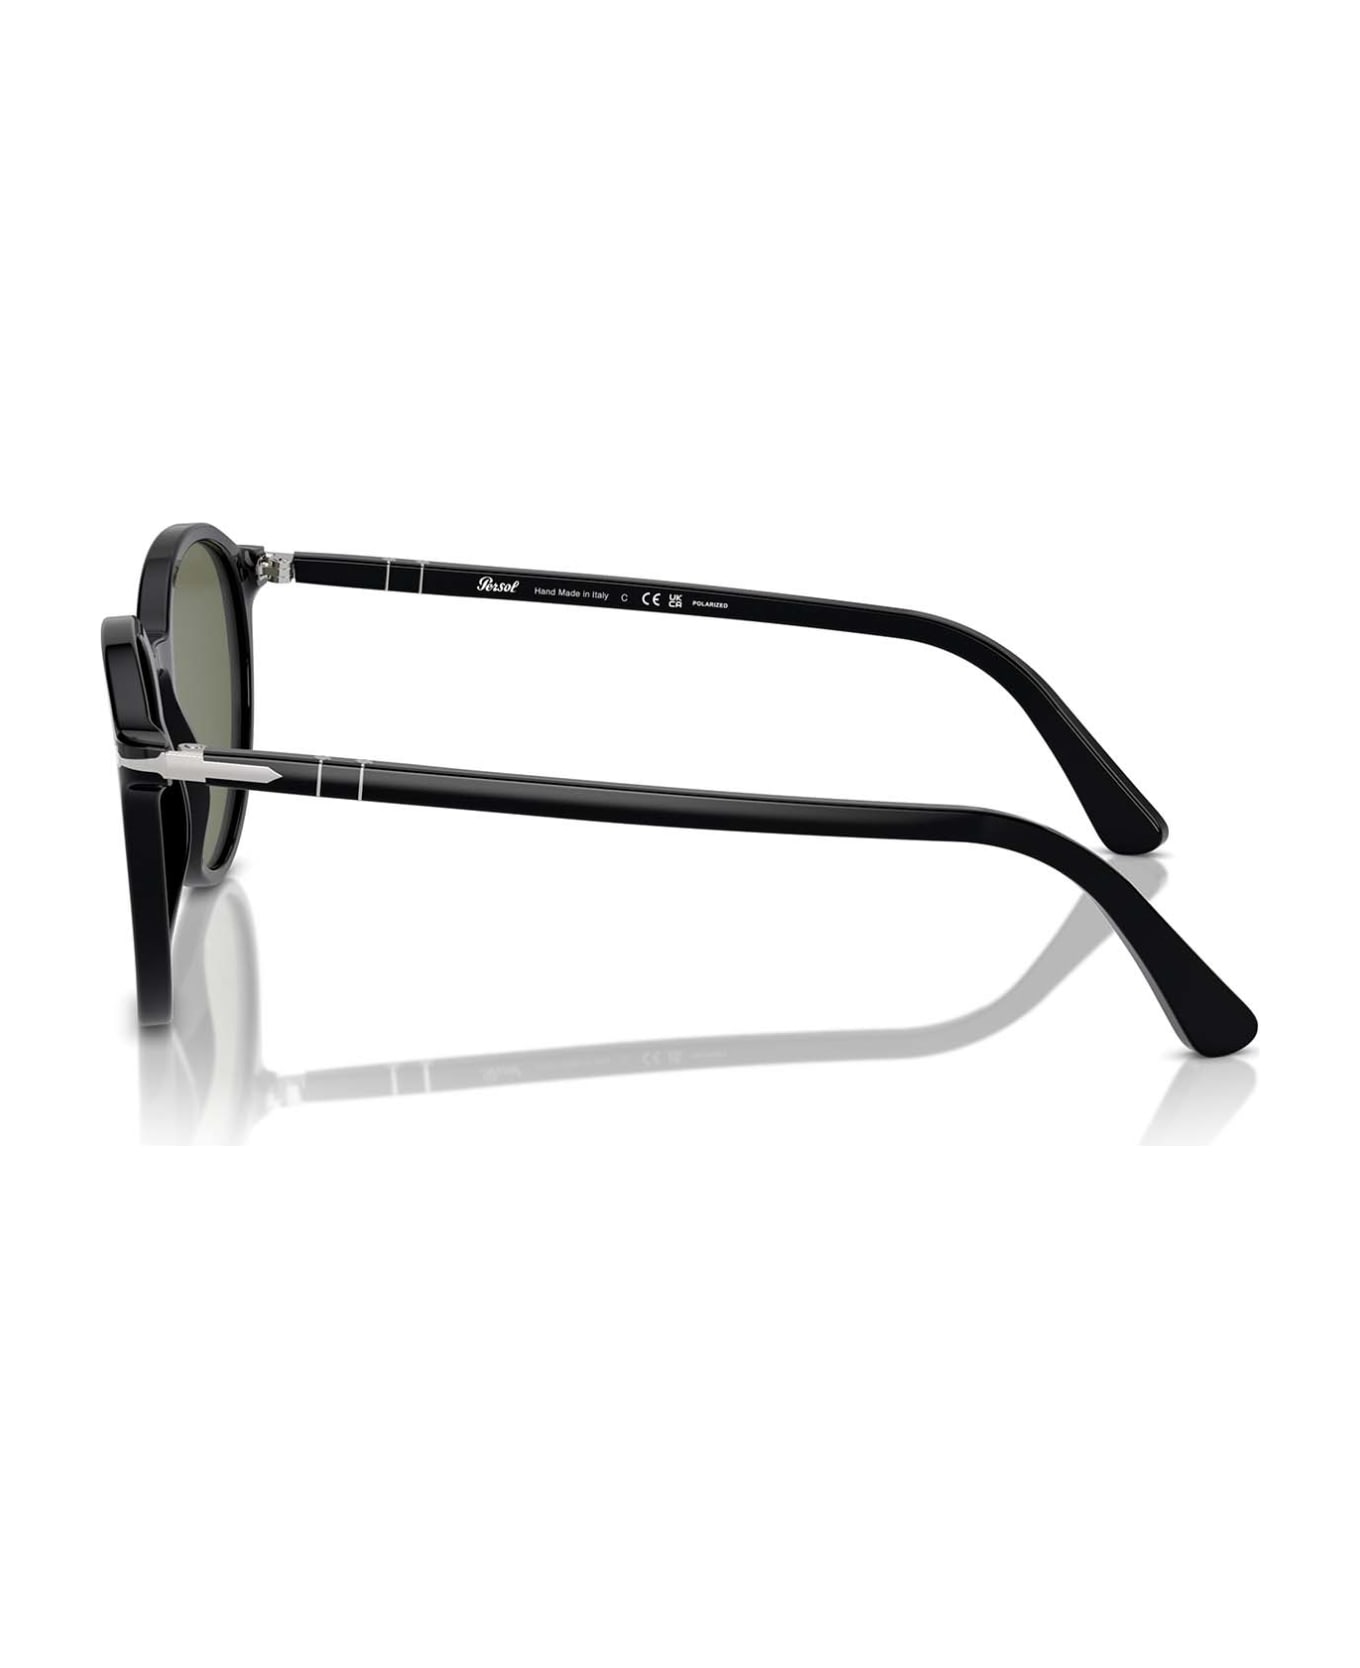 Persol Po3350s Black Sunglasses - Black サングラス